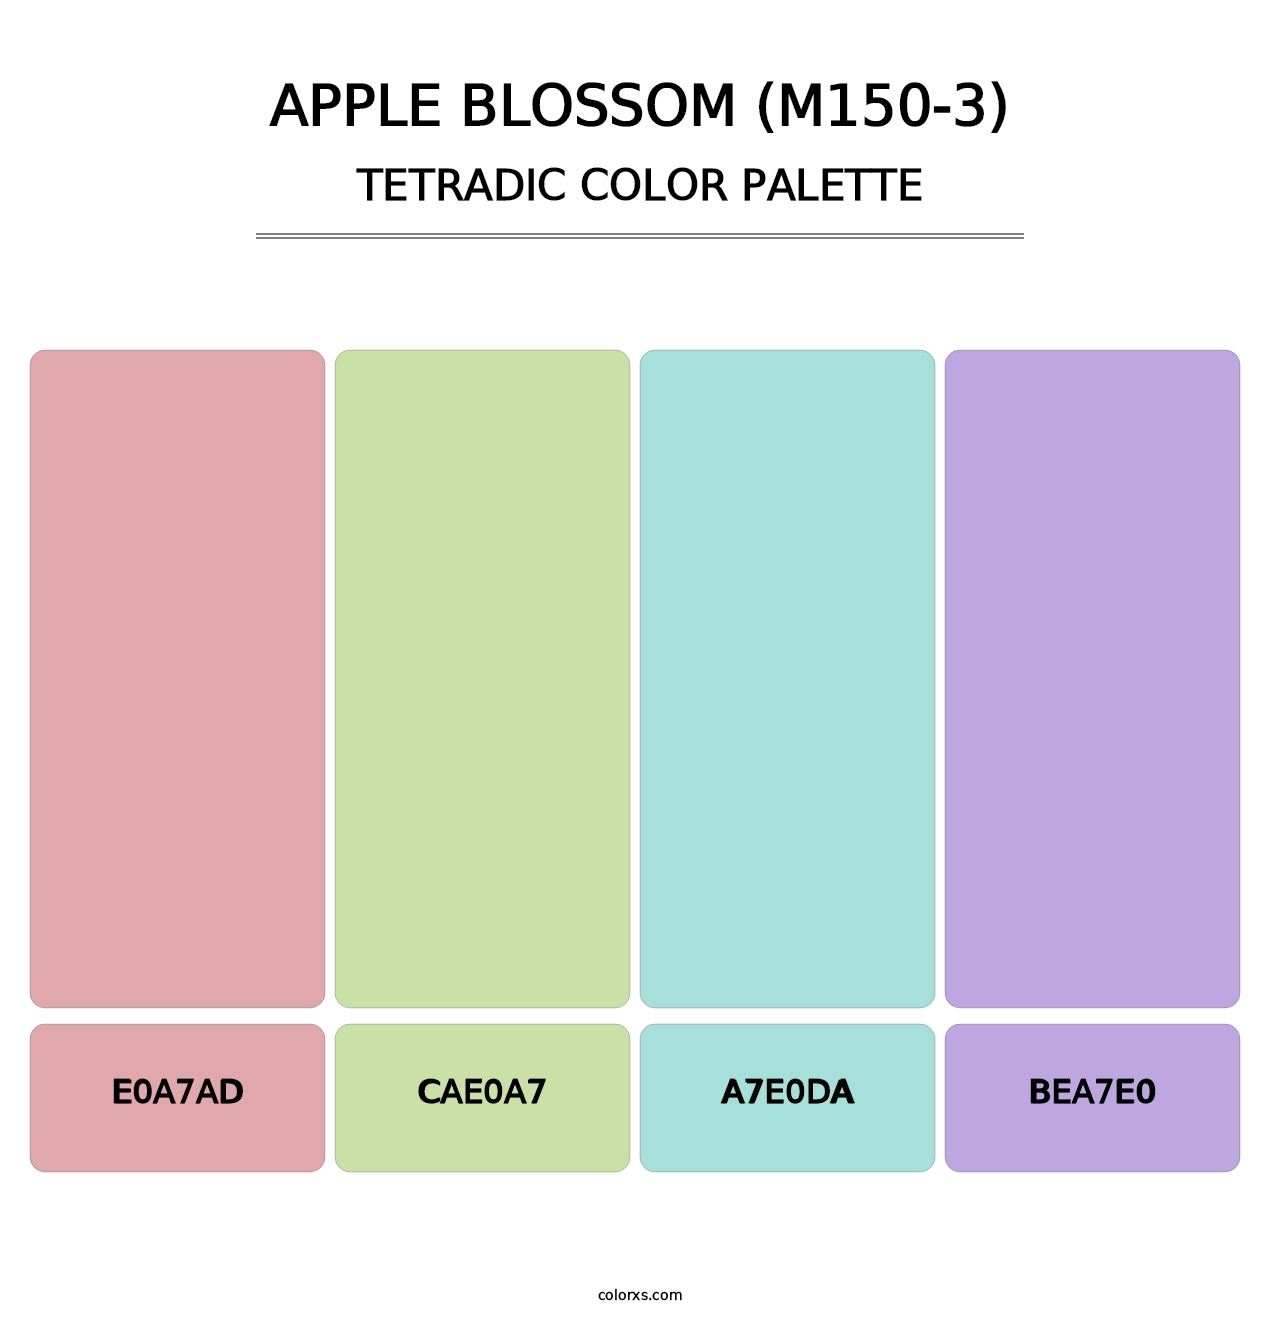 Apple Blossom (M150-3) - Tetradic Color Palette